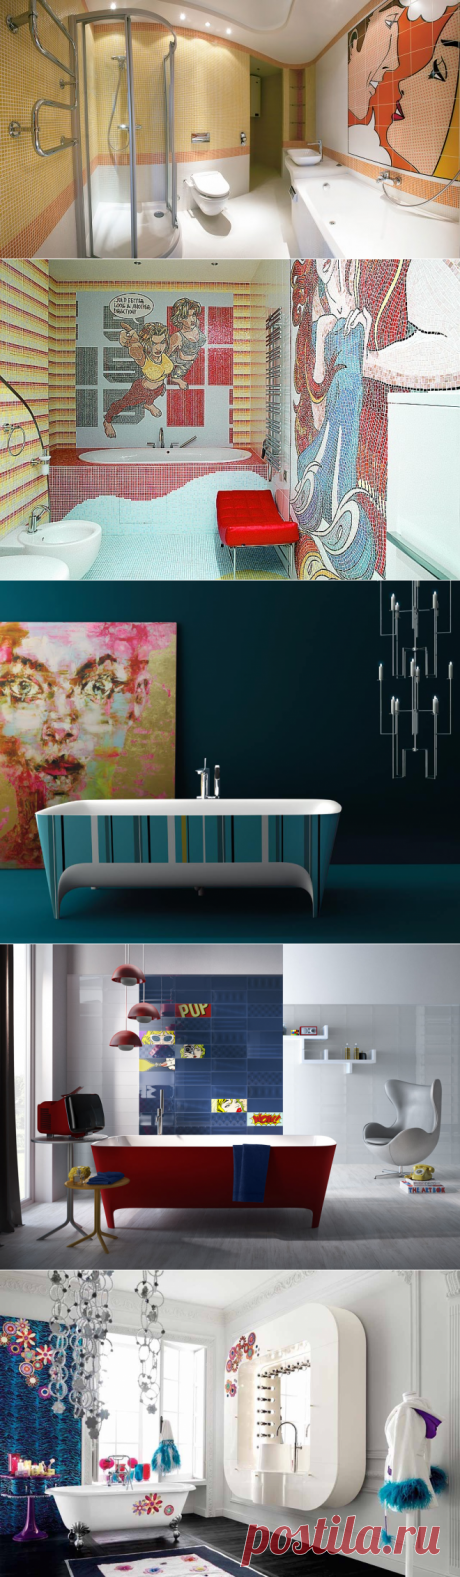 Bathrooms in the Pop Art Style | Interior Design Pictures